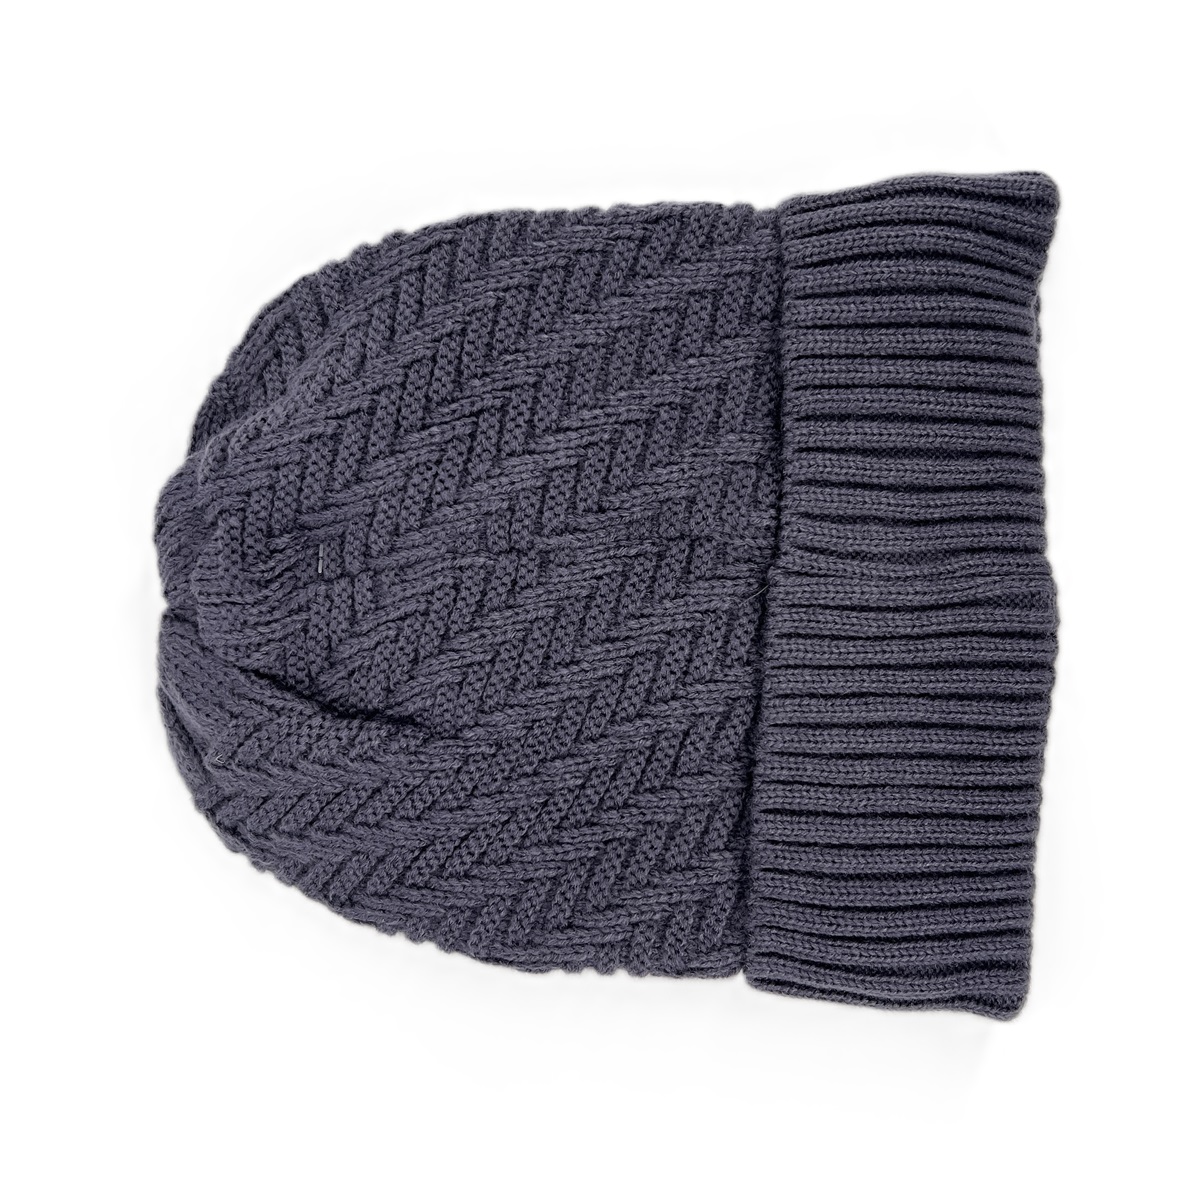 Cable knit Fleece lined Hats ST6912 (6 Colors 1 Doz)